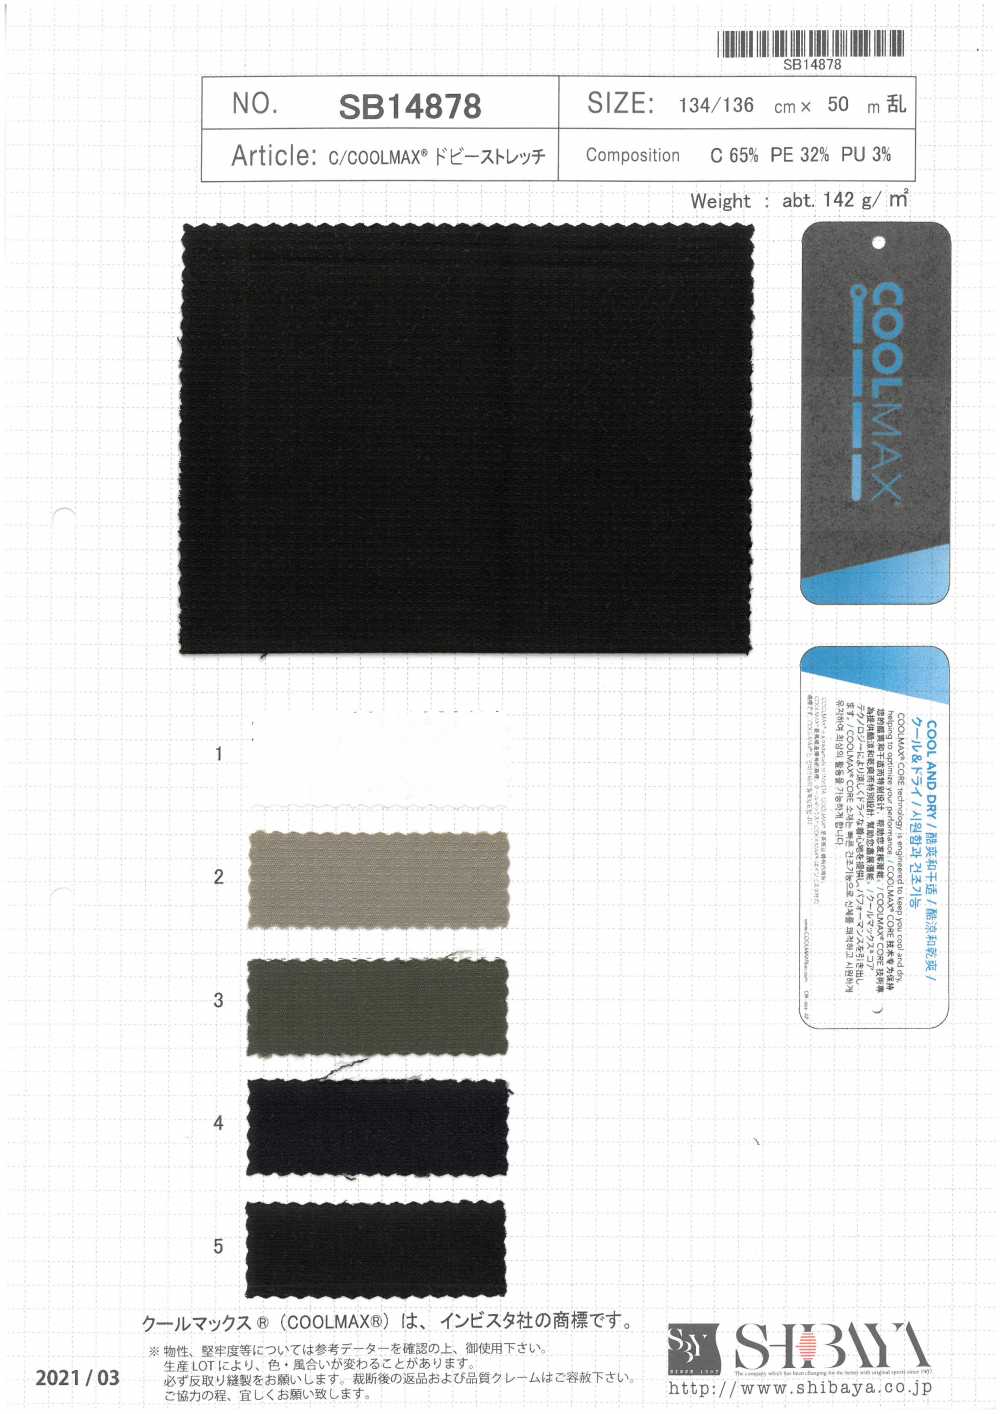 SB14878 [OUTLET] COOLMAX(R) Dobby Stretch[Textile / Fabric] SHIBAYA